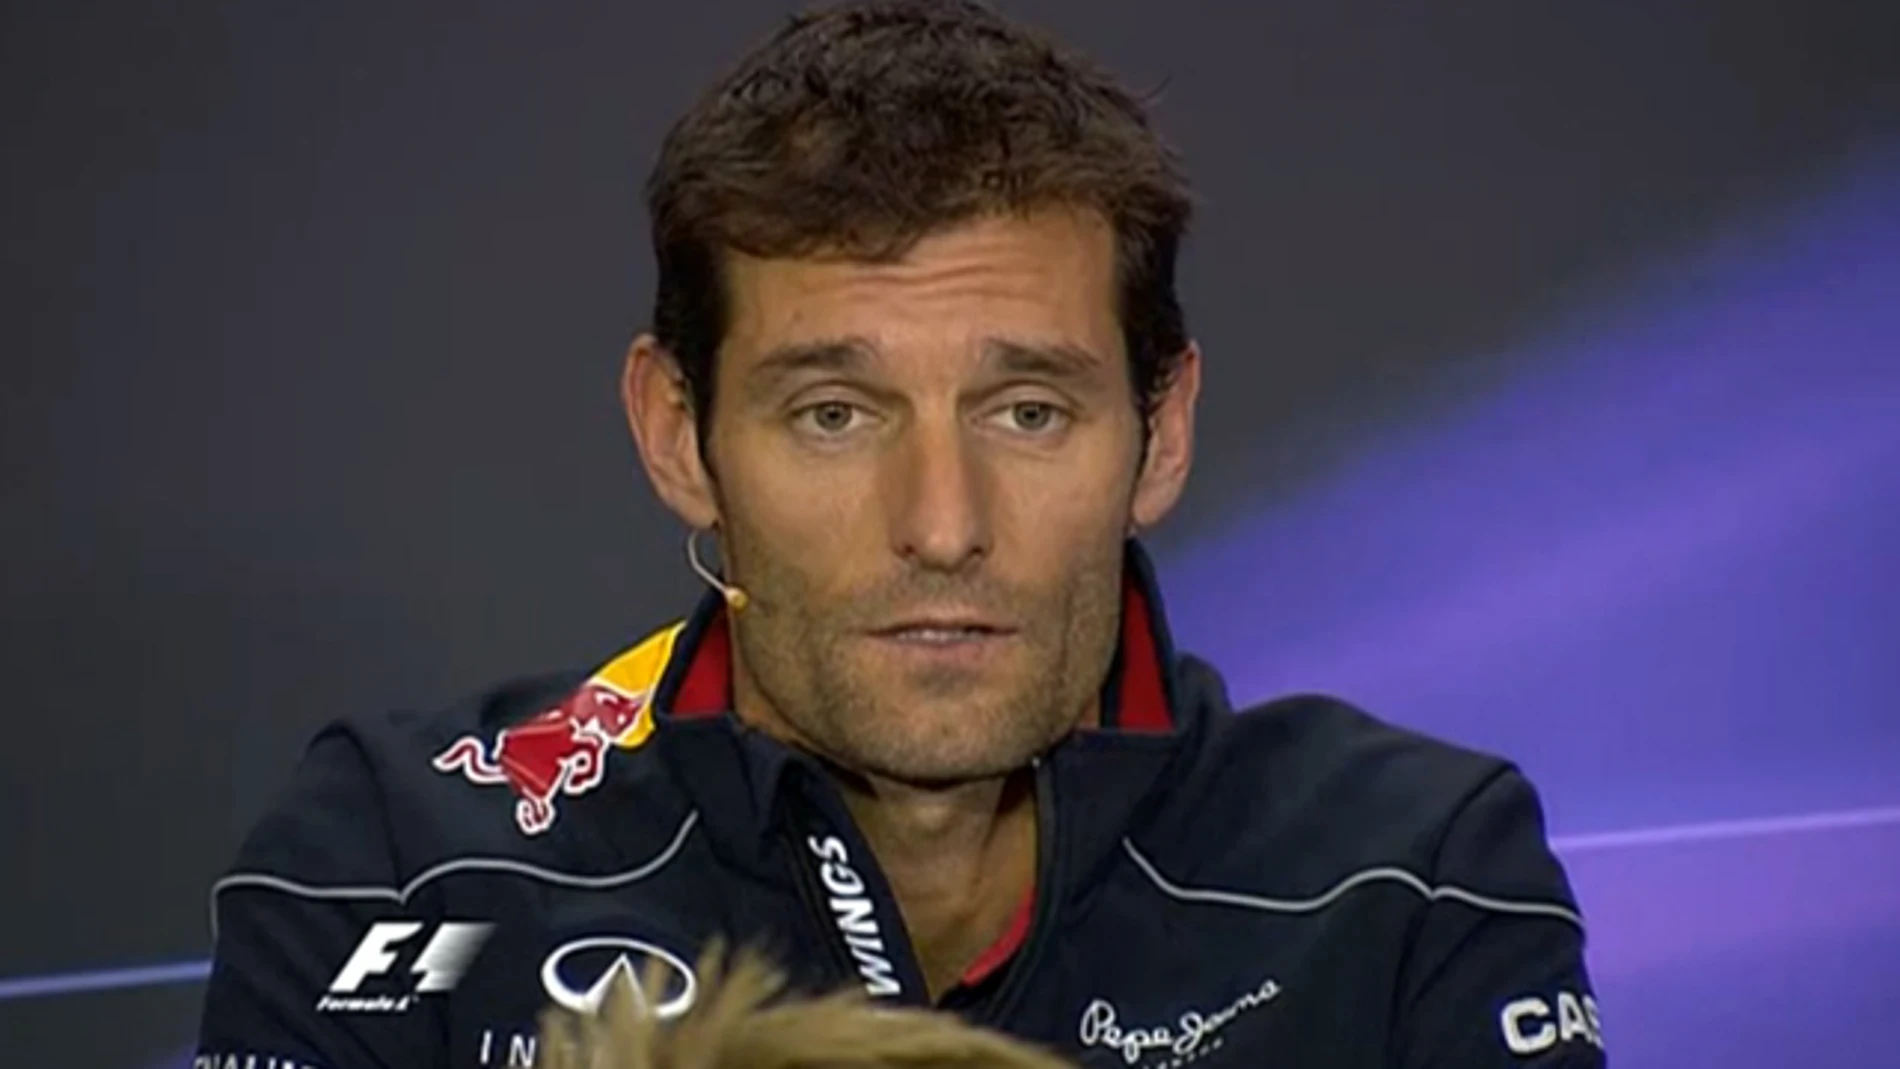 Mark Webber en la rueda de prensa de la FIA